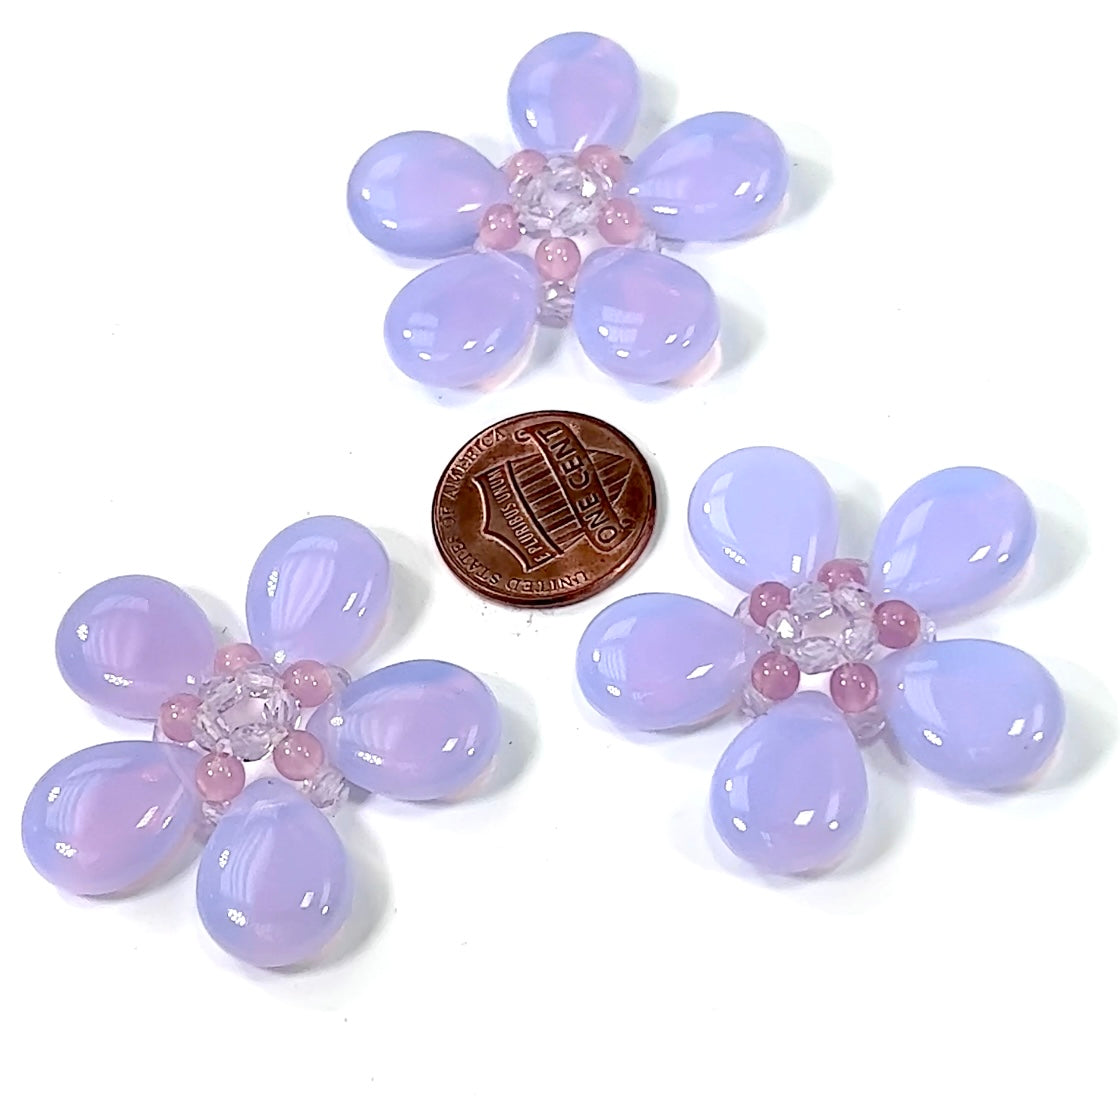 Czech Glass Beads 1.5 inch Flower Ornament Blue and Pink Opal Combination 1 piece CA009